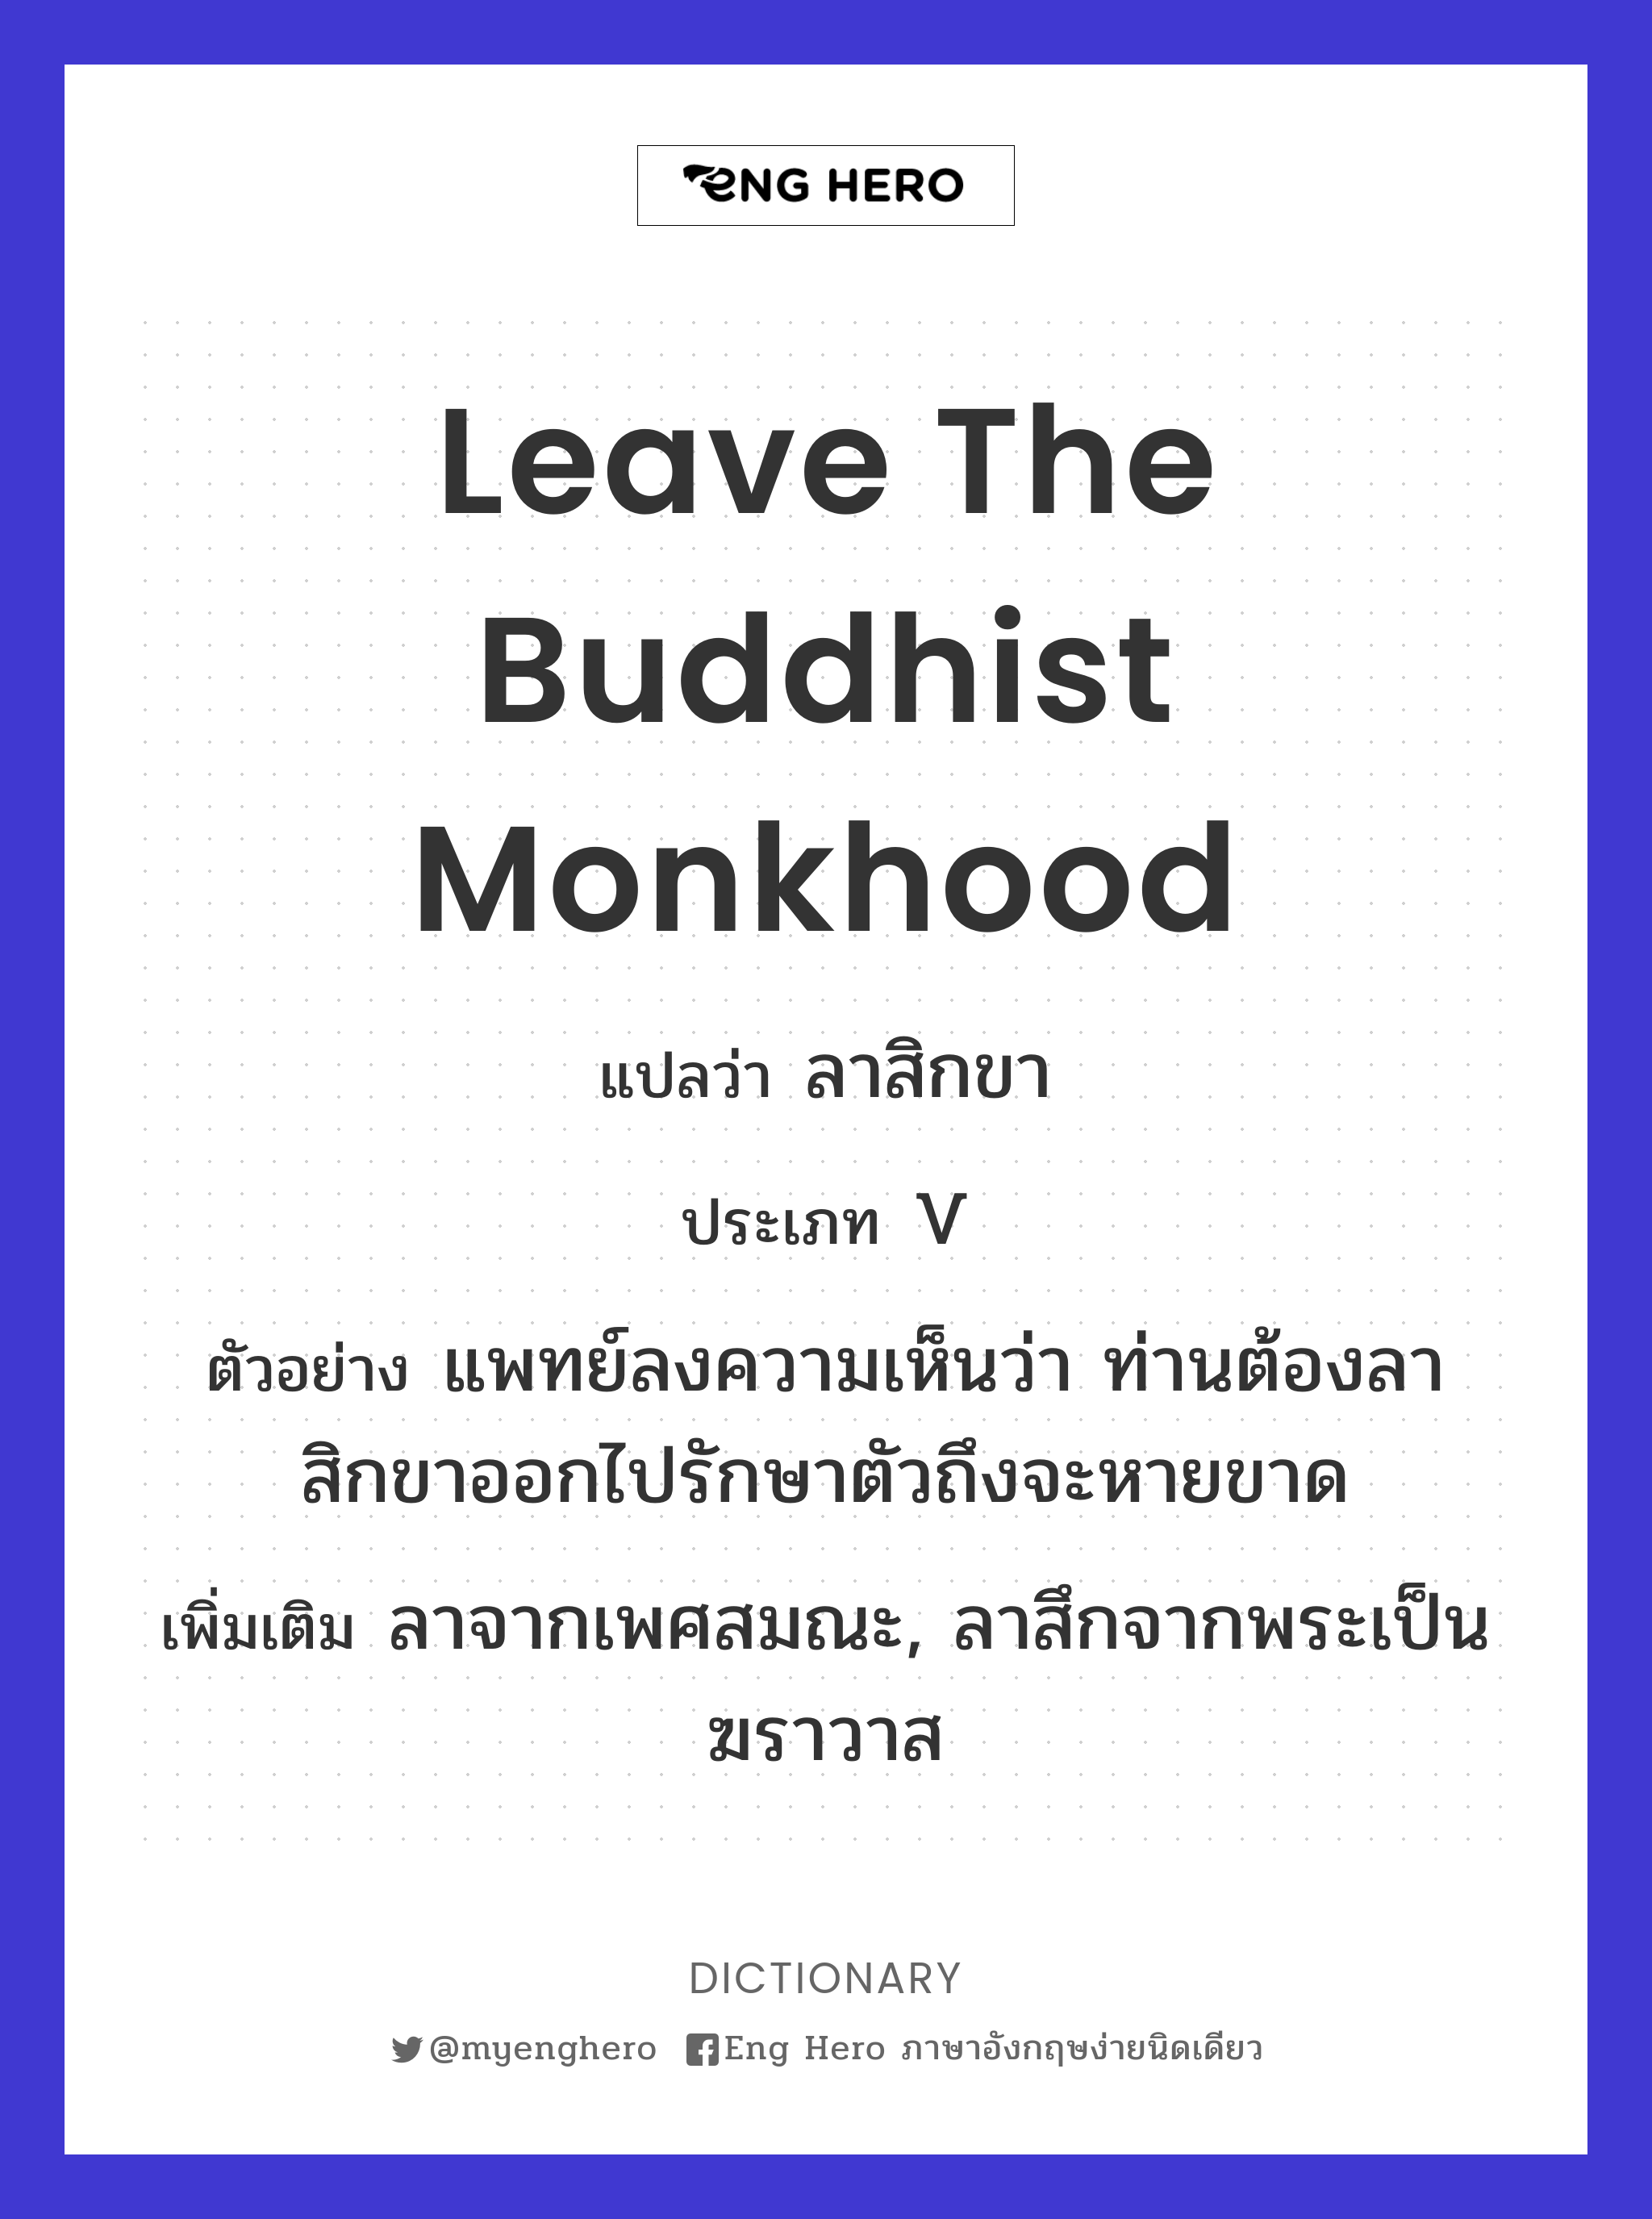 leave the Buddhist monkhood